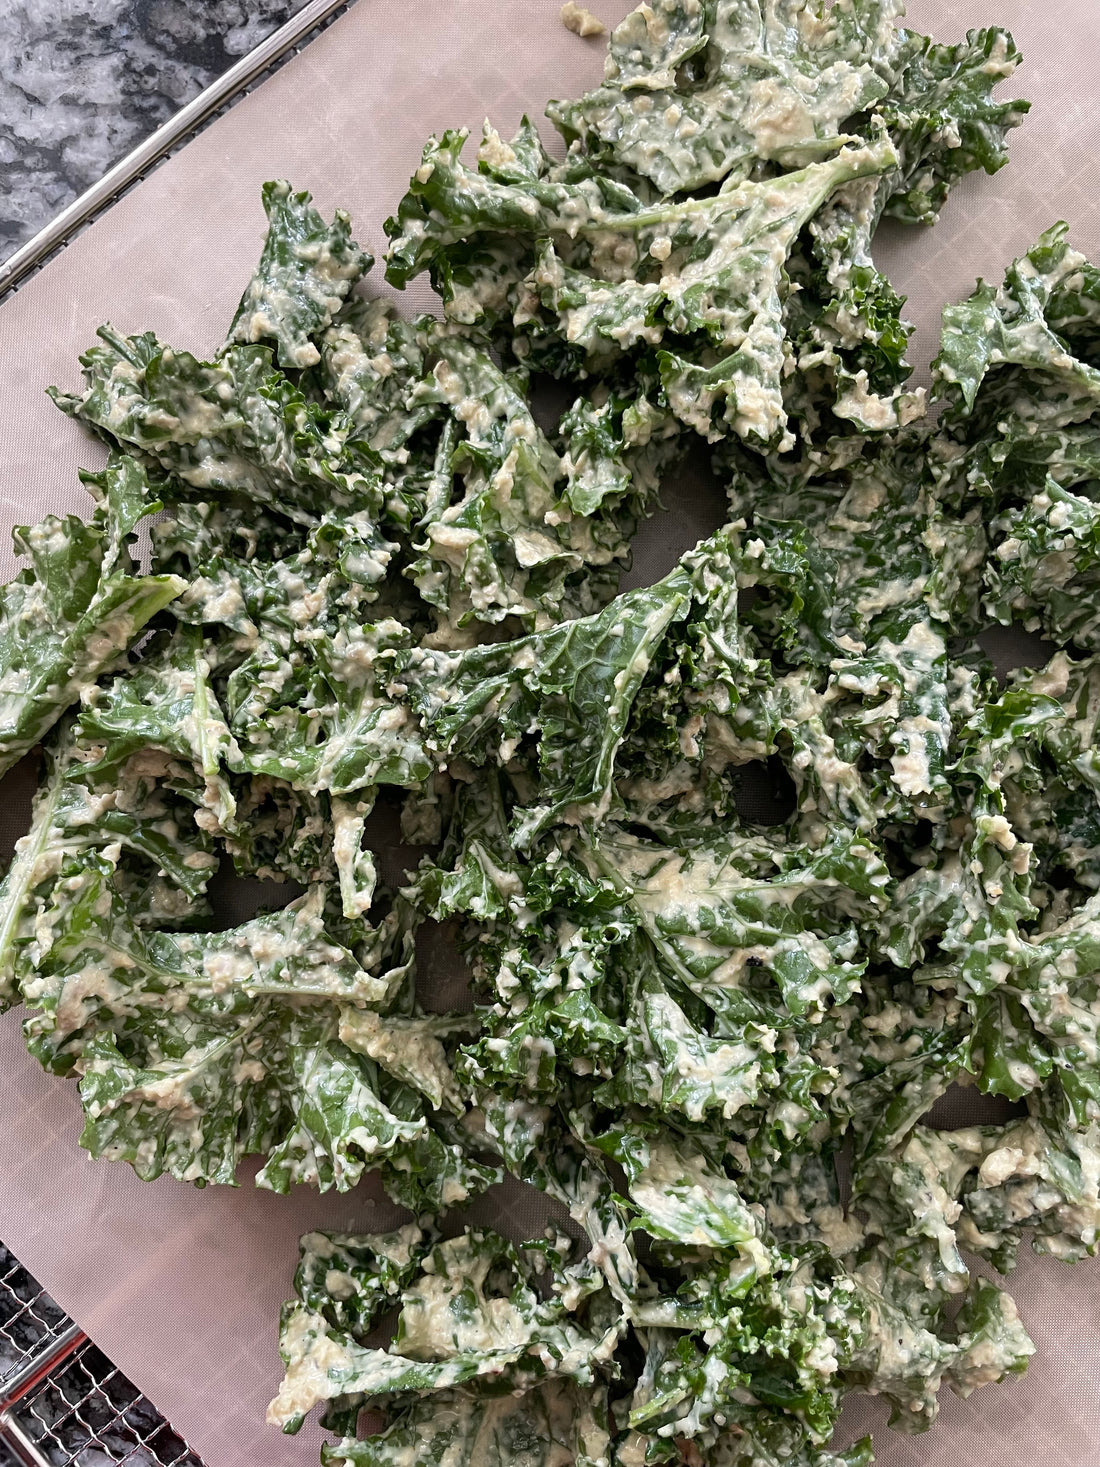 SÖLAR FLEXUS' Kale Chips Recipe